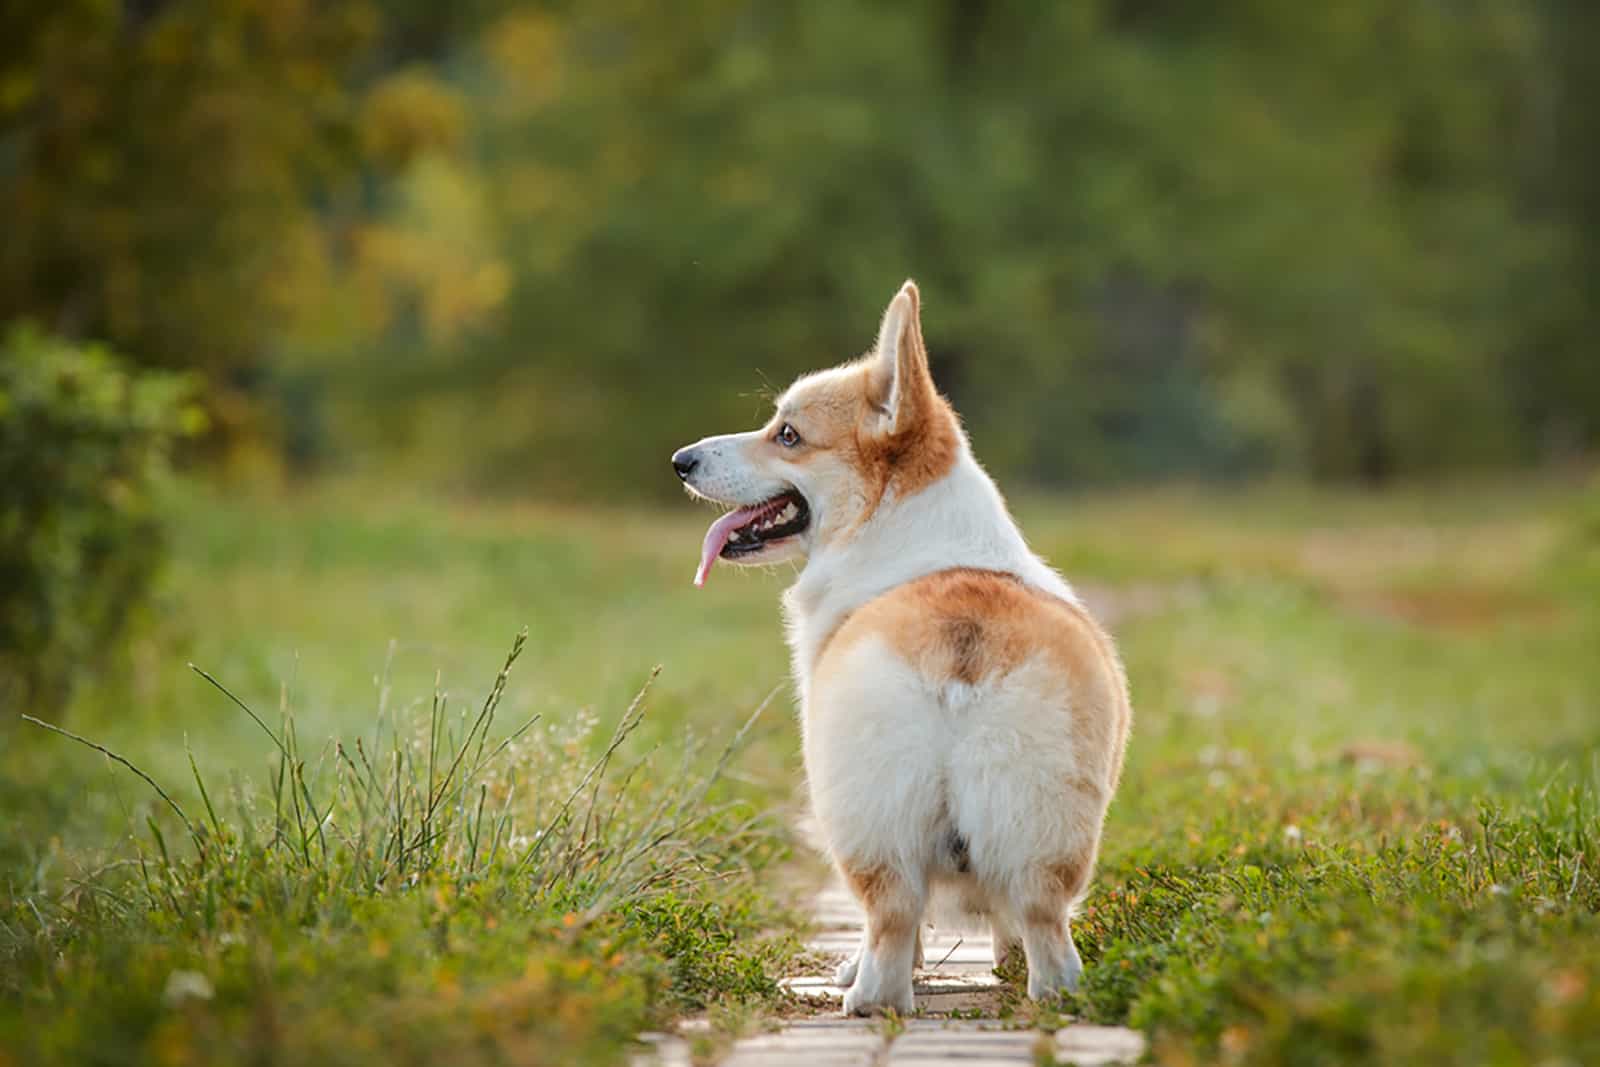 corgi dog with a docked tail walking outdoors